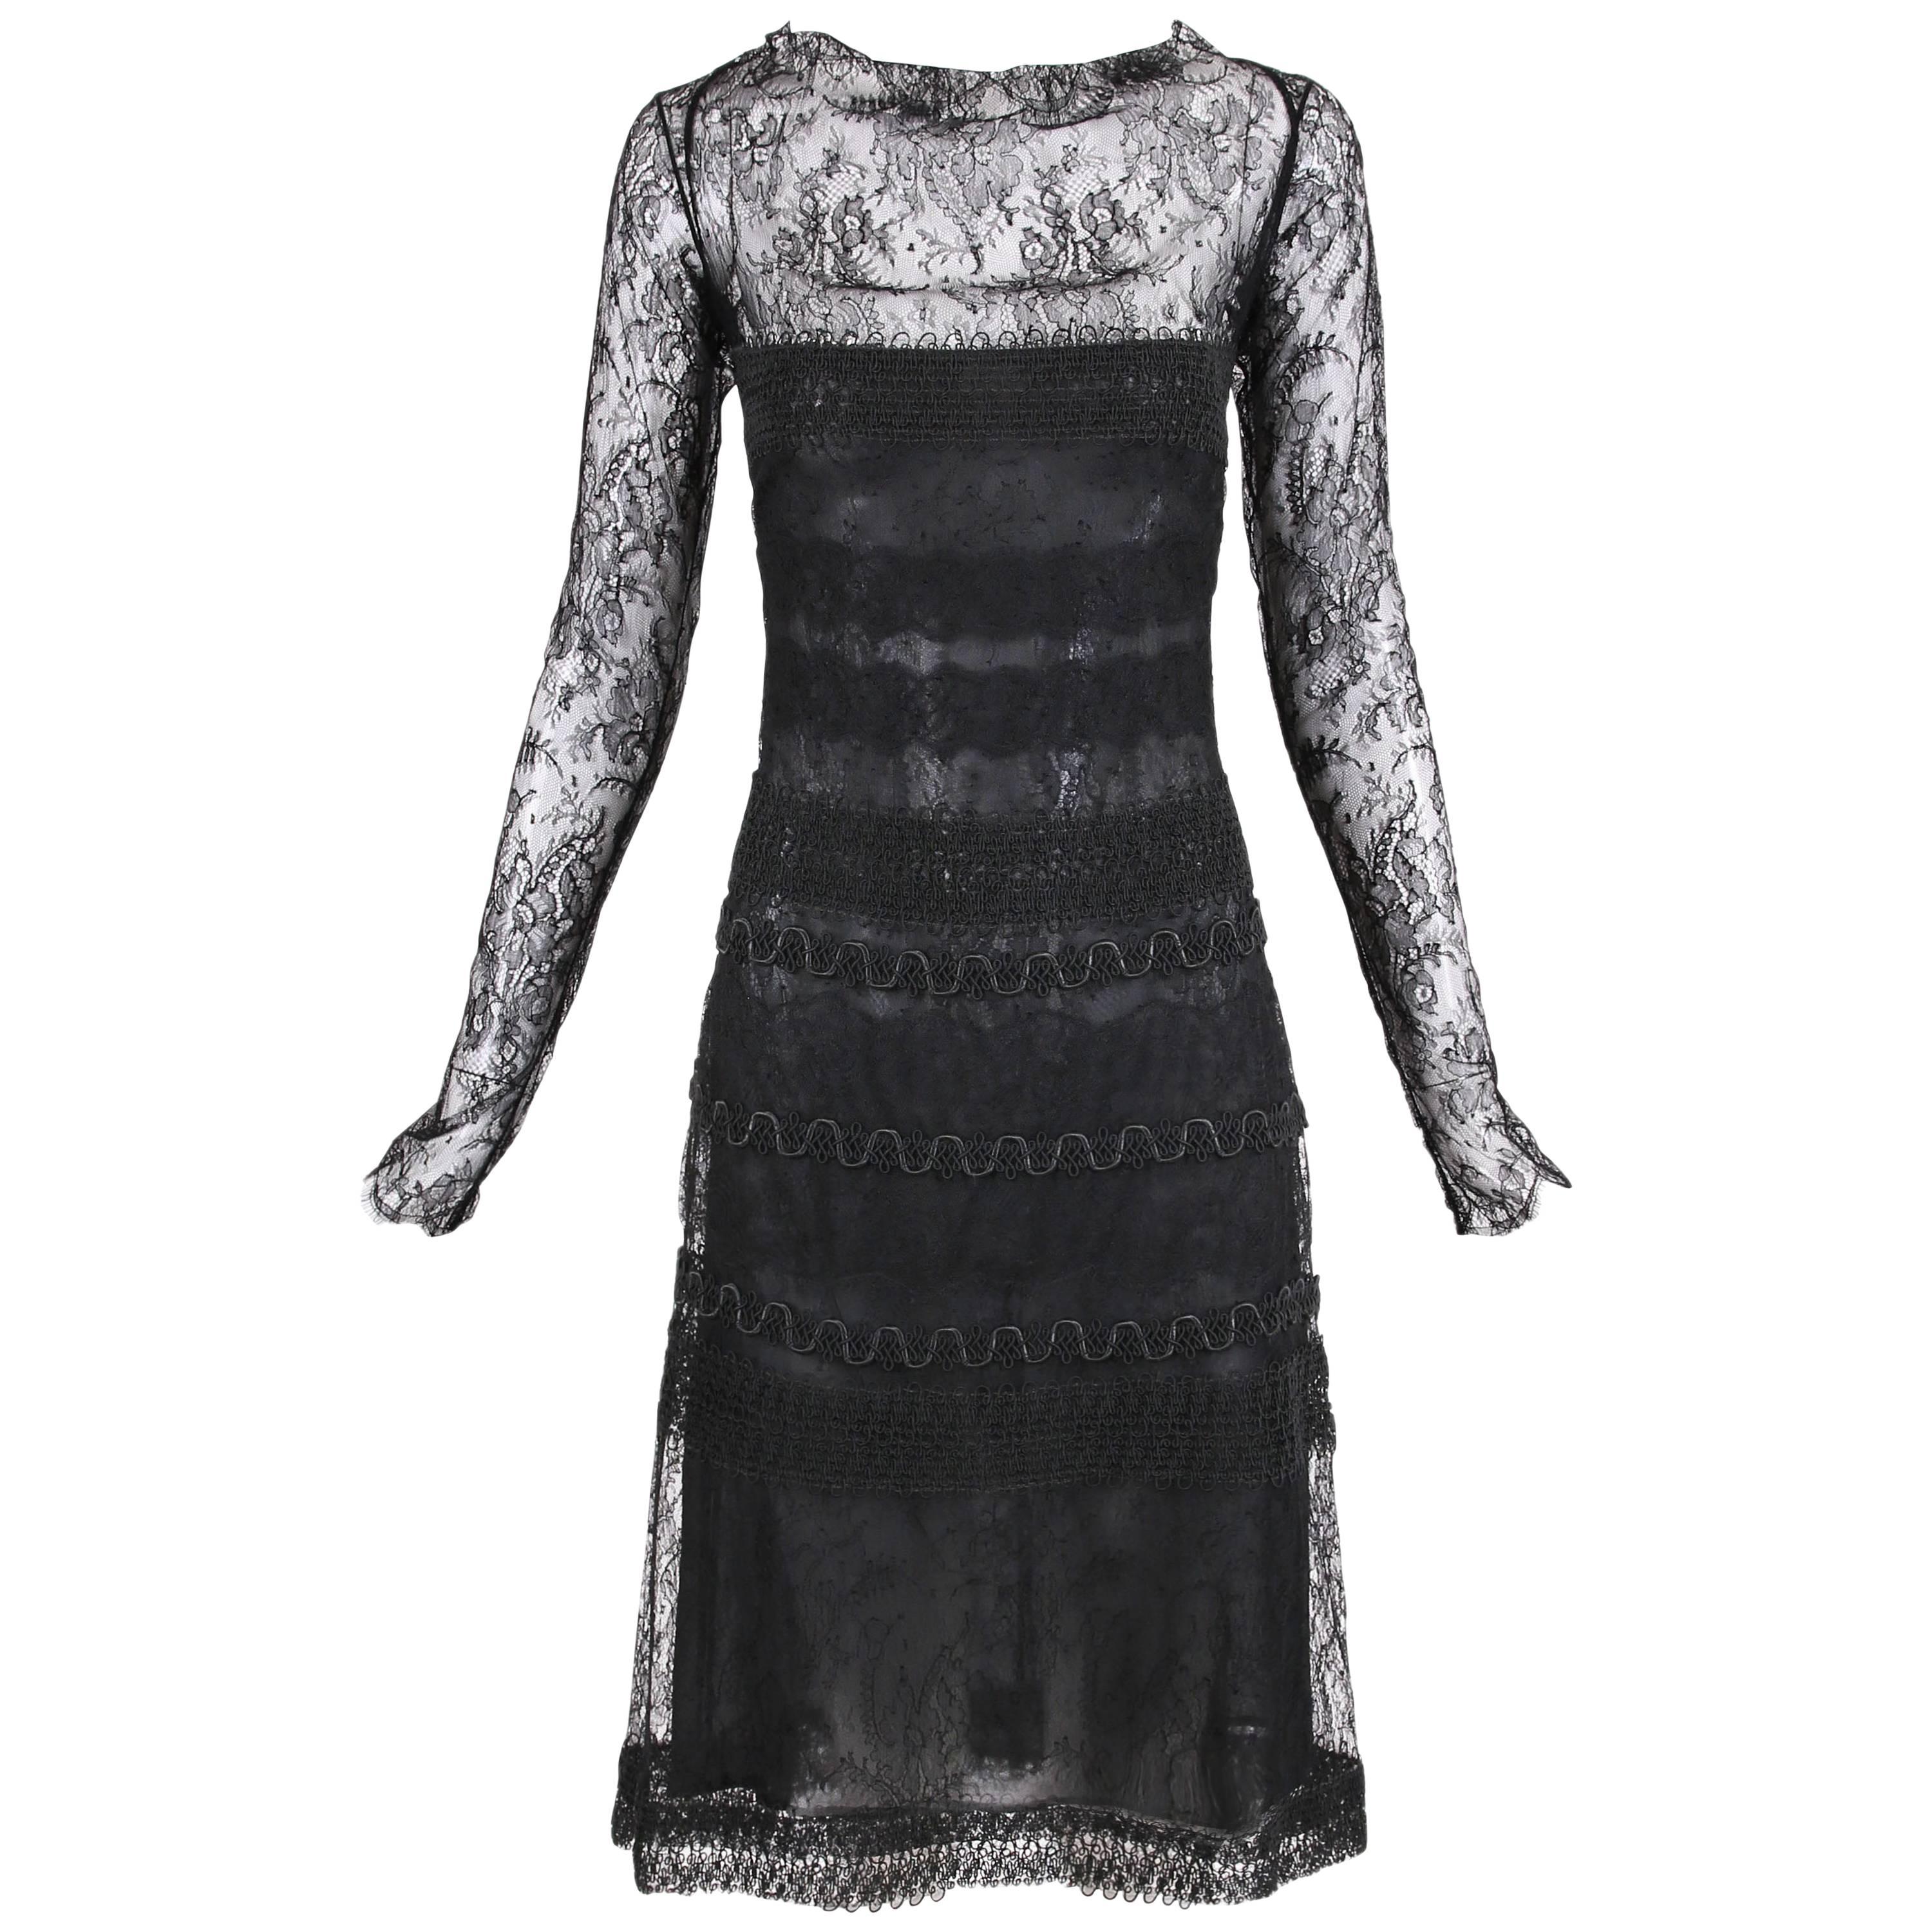 Vintage Guy Laroche Couture Black Lace Illusion Cocktail Dress